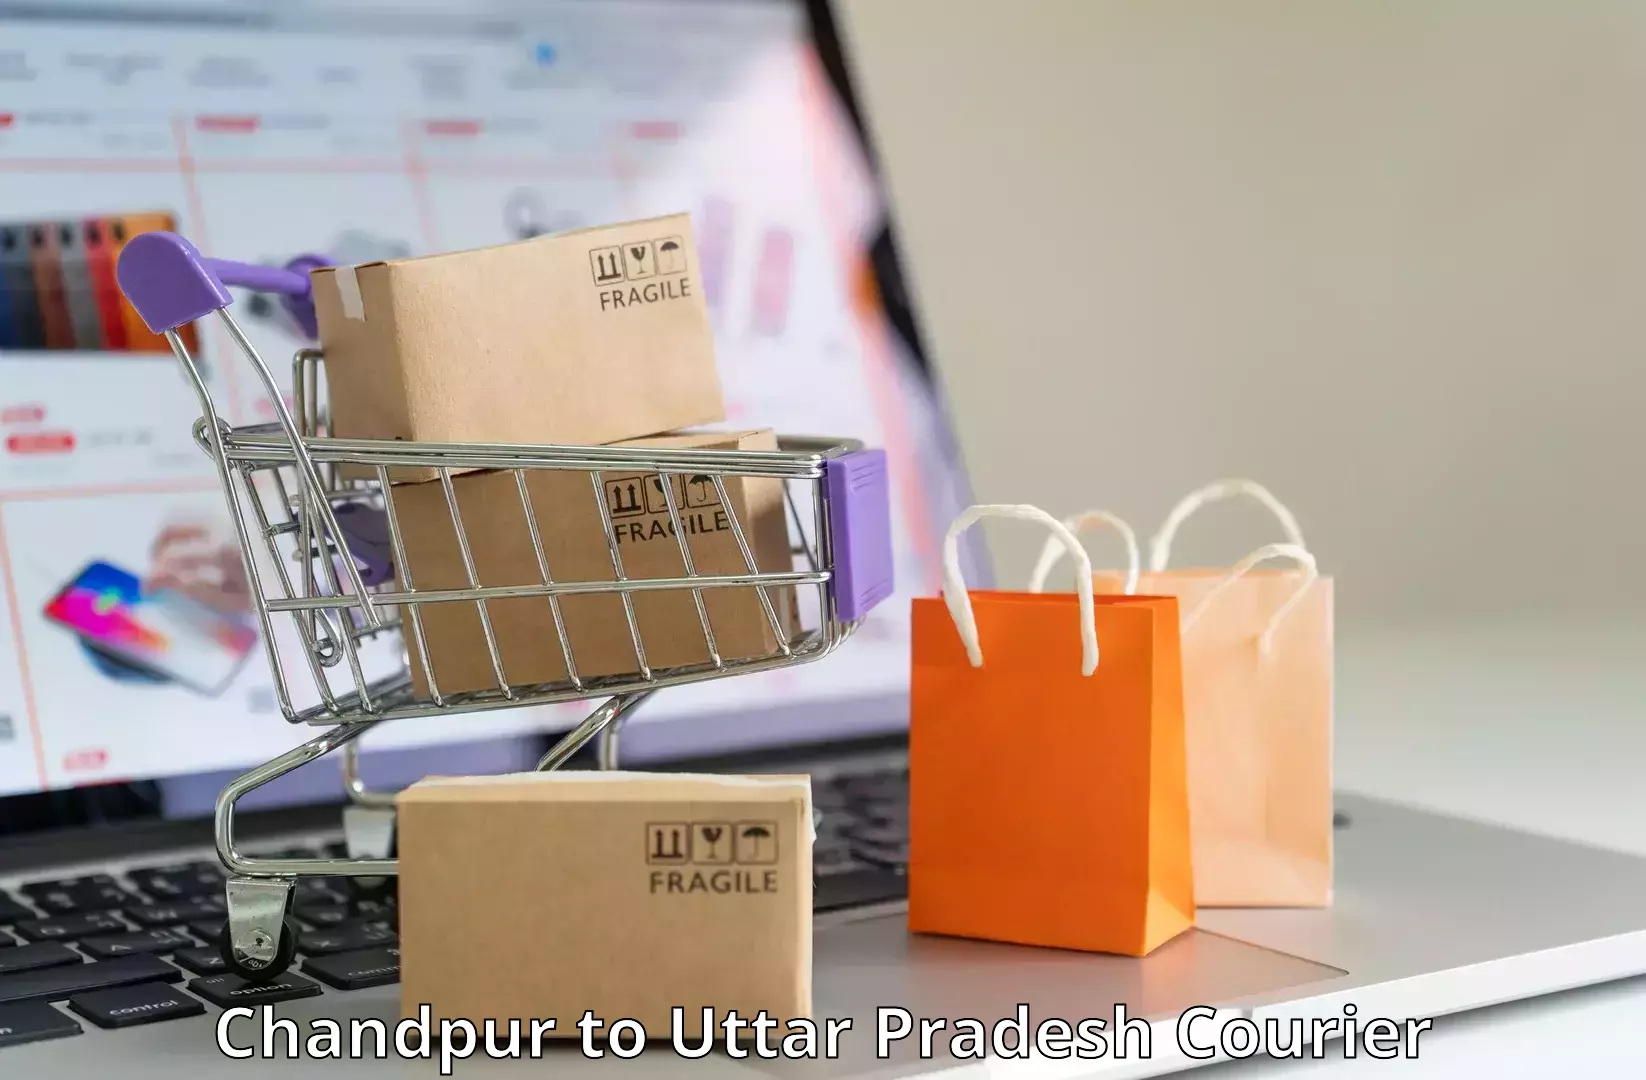 Customer-centric shipping in Chandpur to Mohammadi